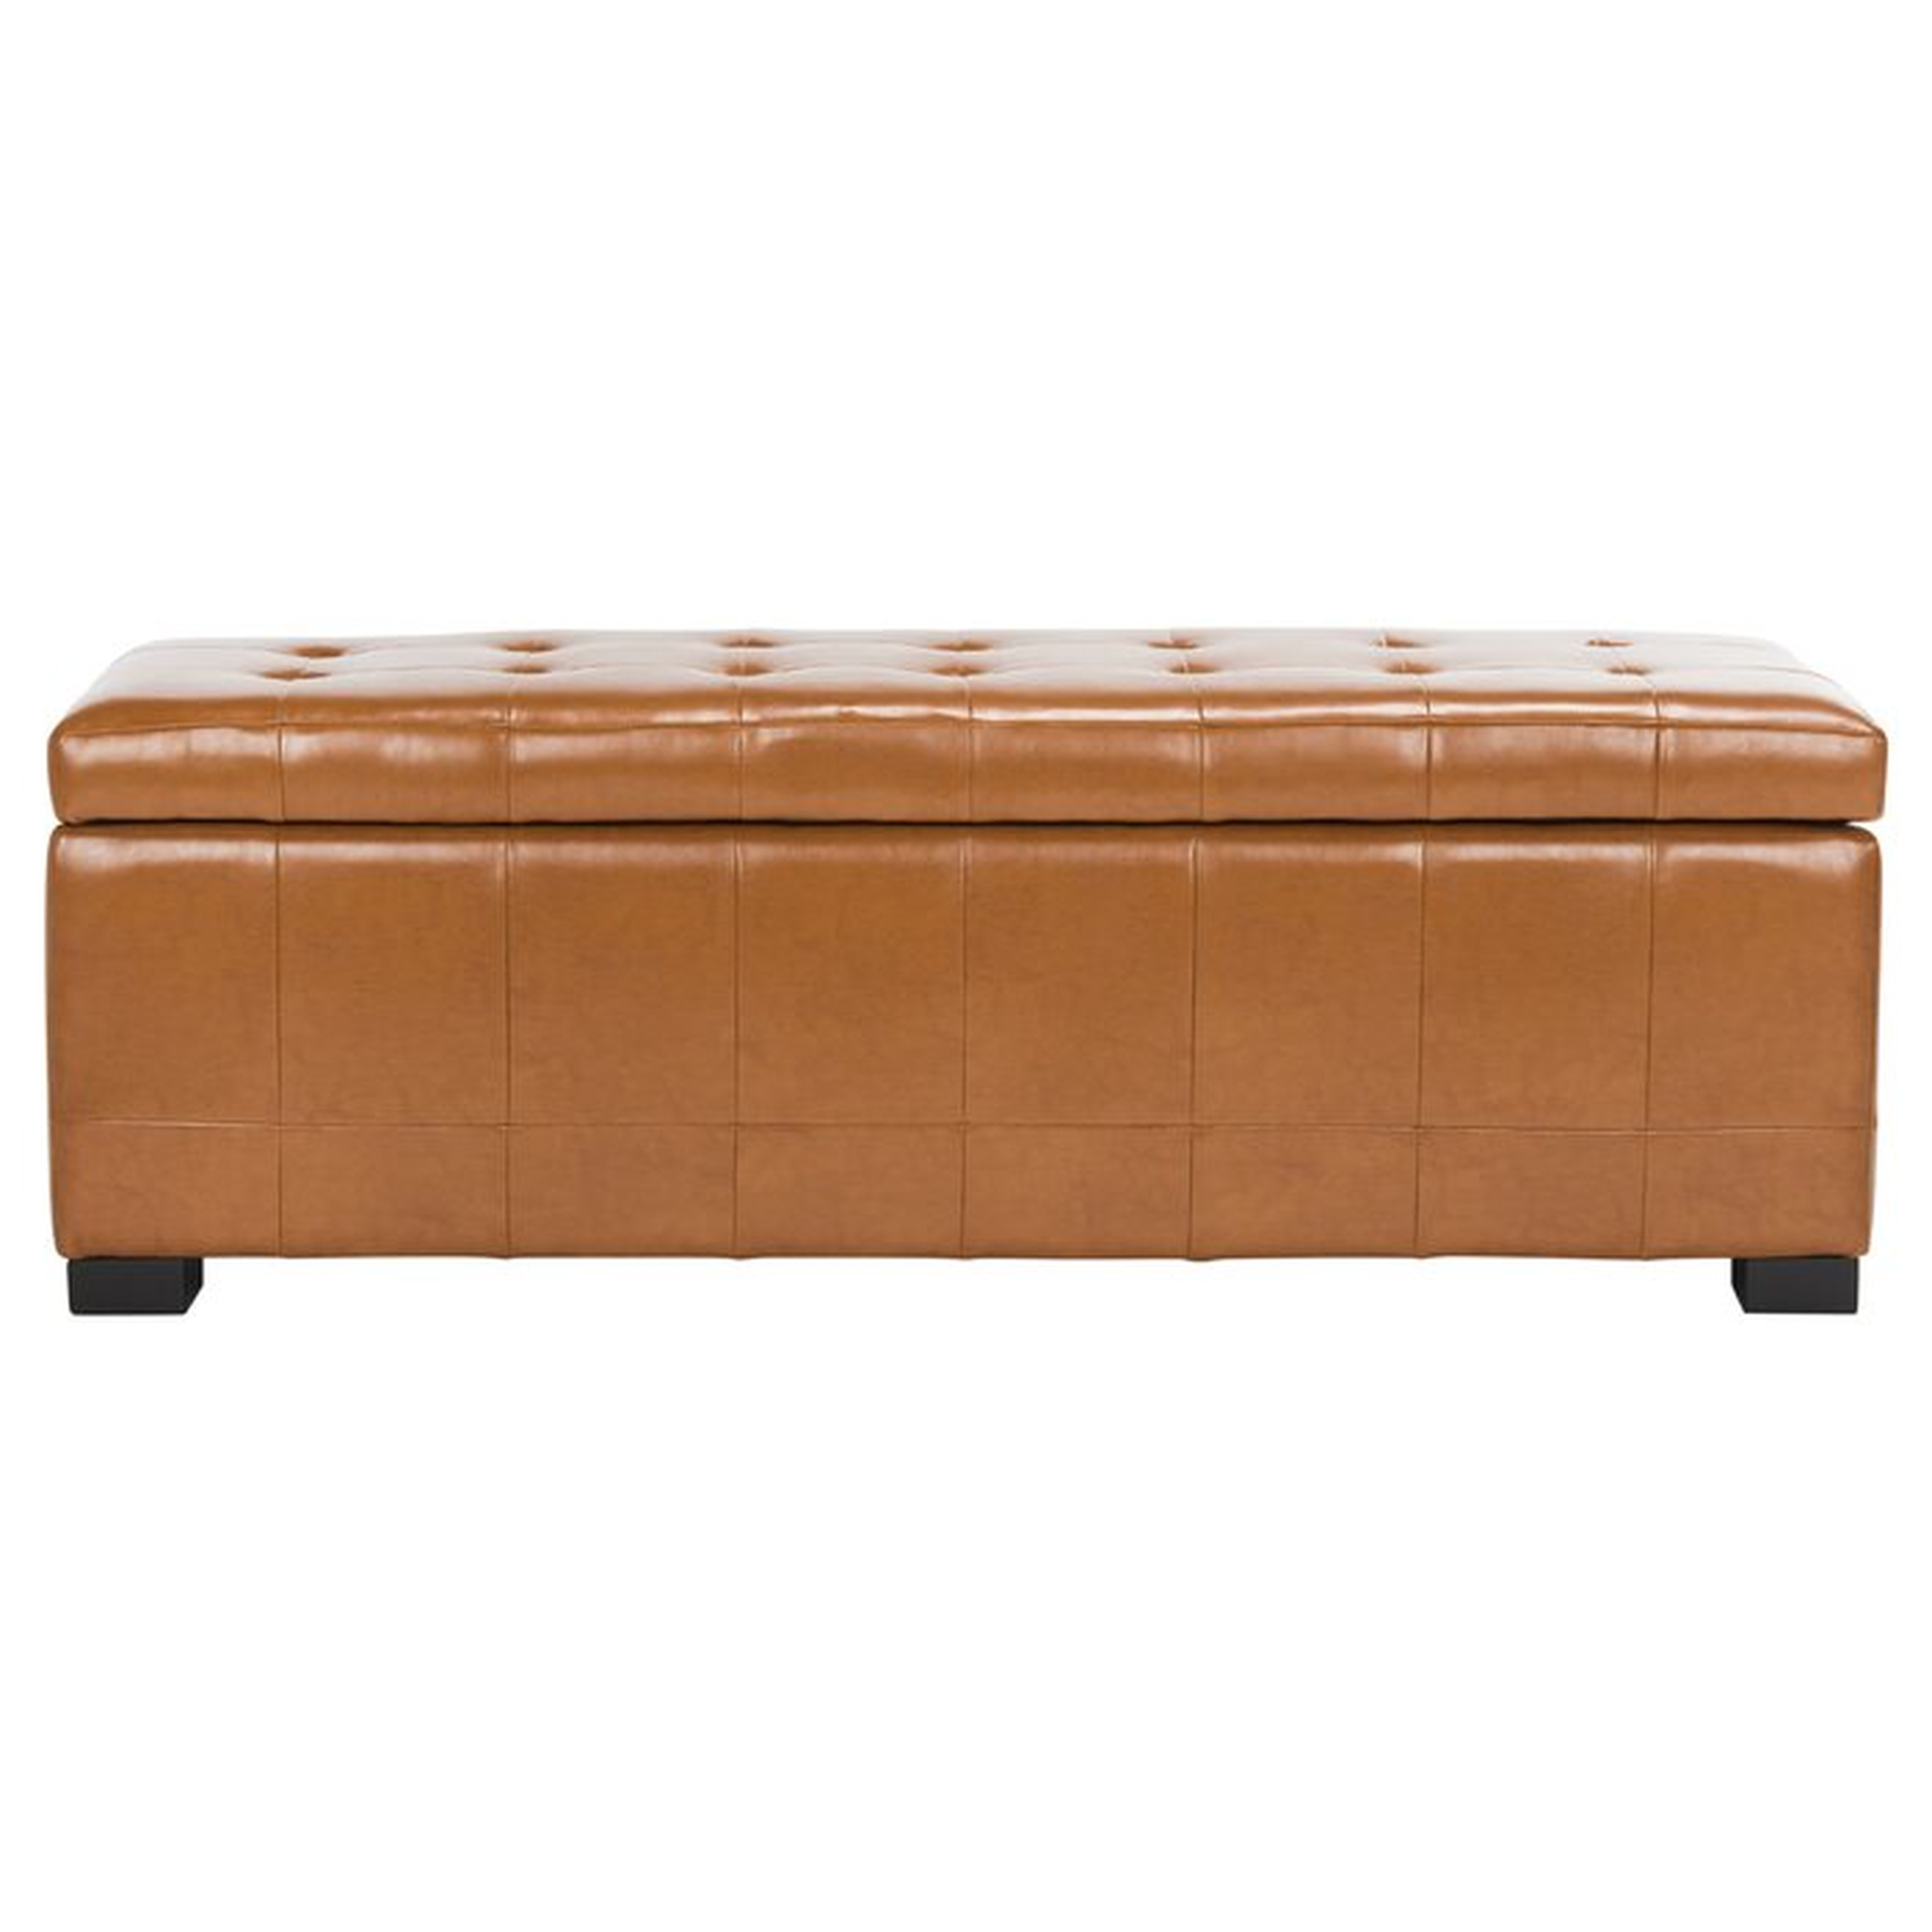 Sinope Leather Storage Bench - Wayfair